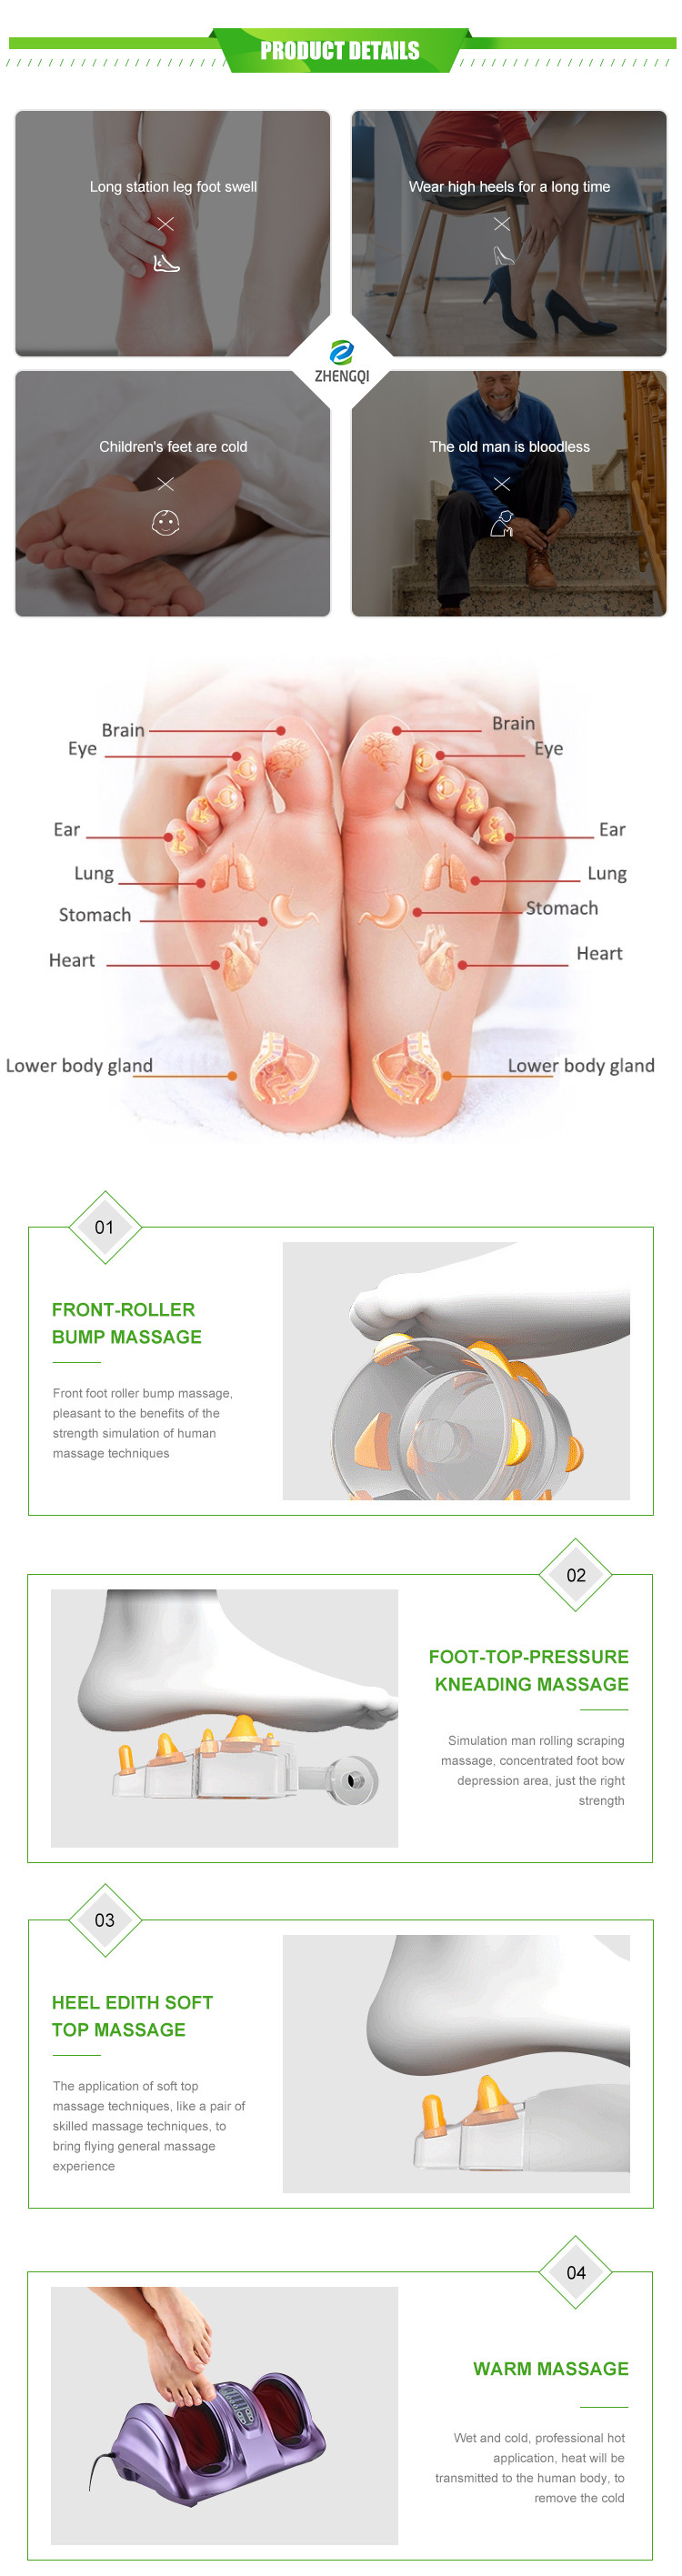 foot massager function